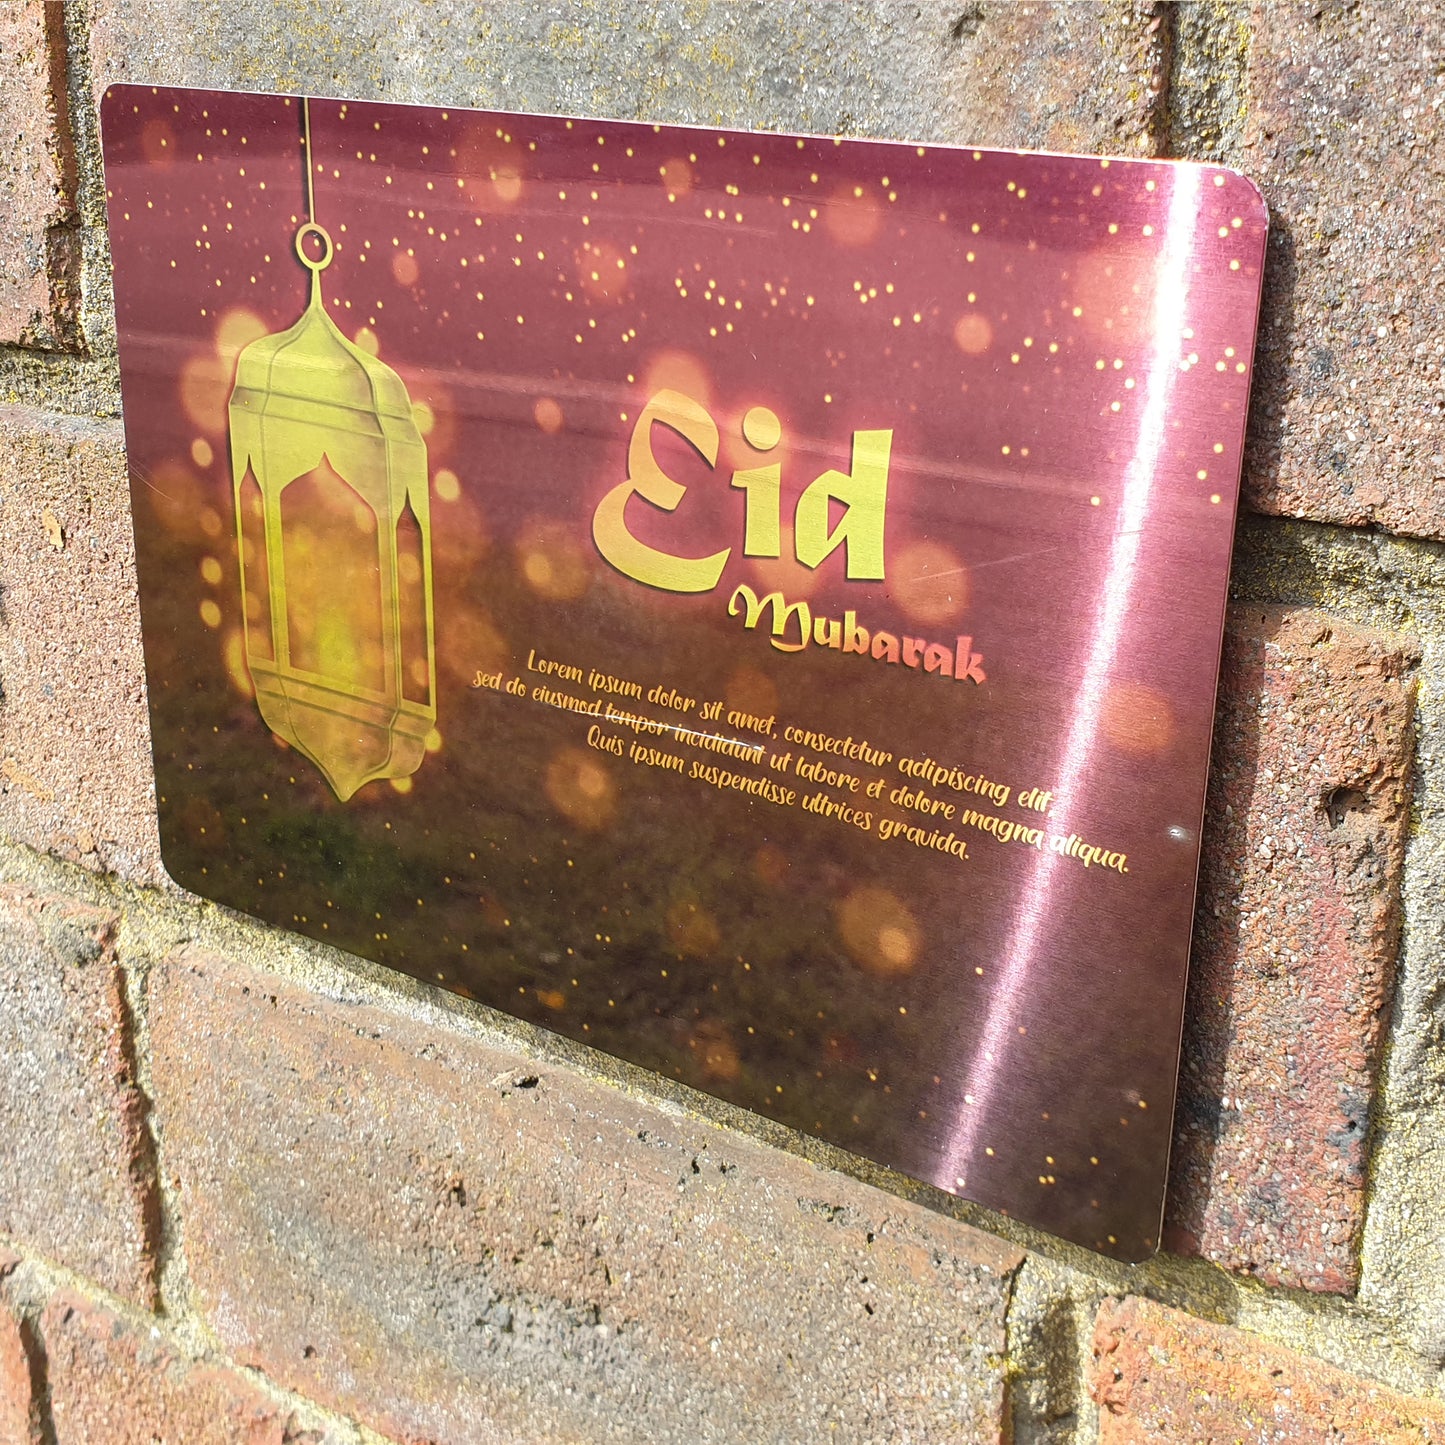 Personalised Eid Mubarak Mirror Metal Sign One Lantern Brick Red Background - Add Your Custom Text